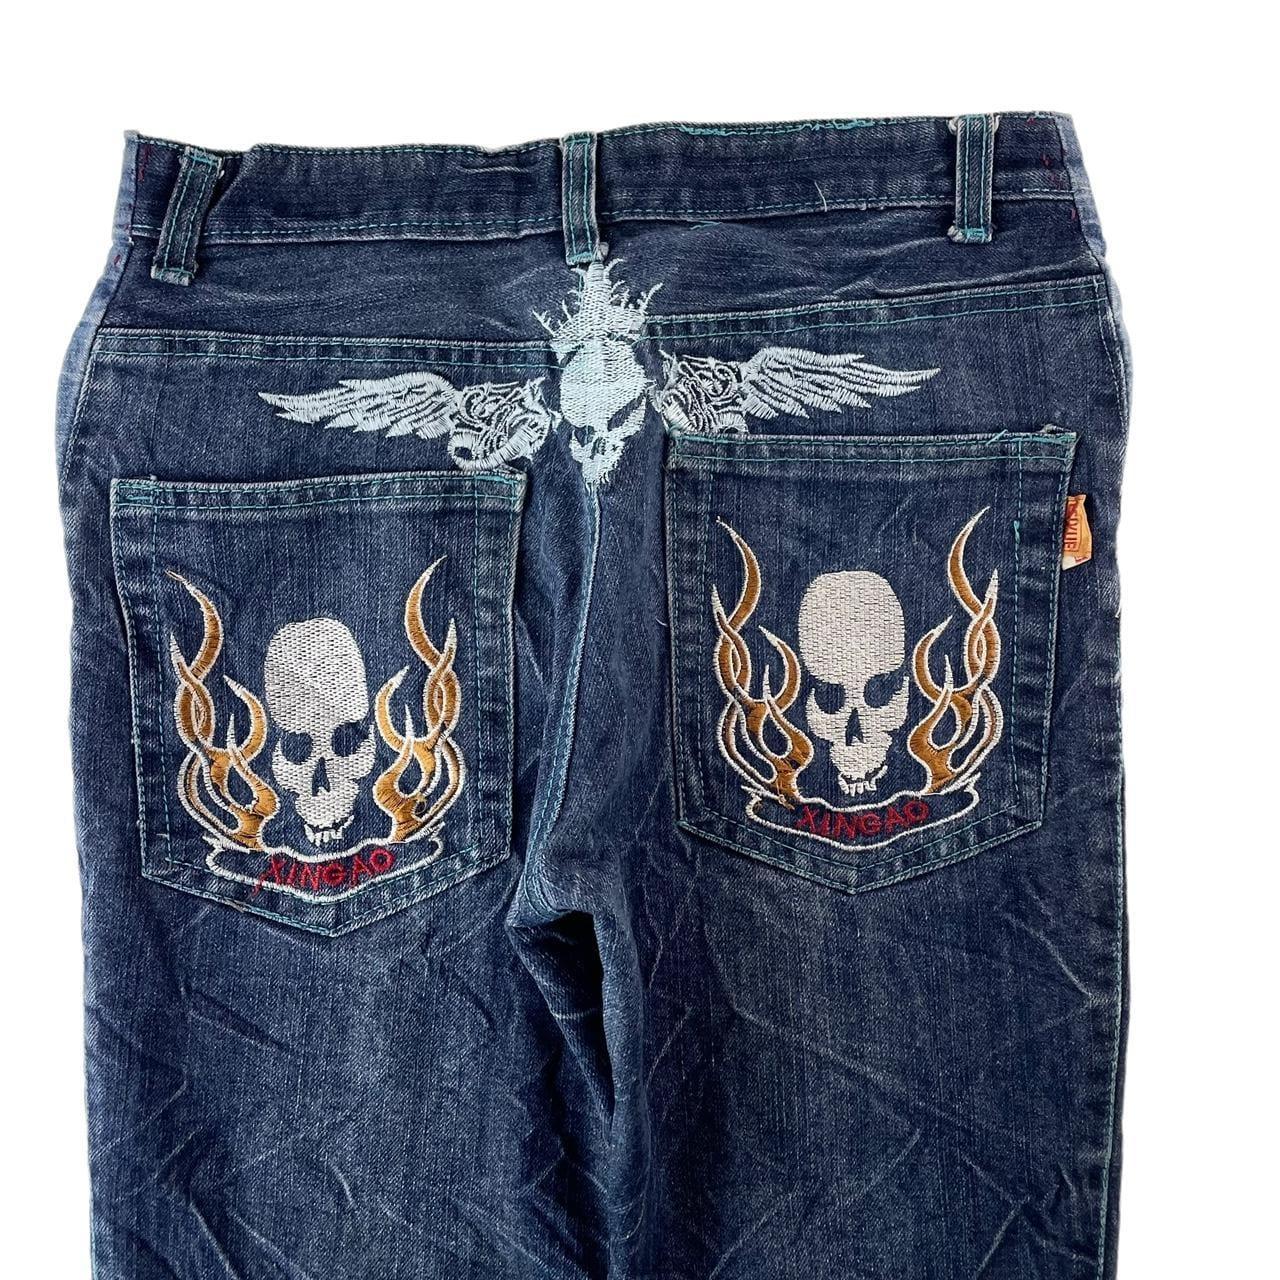 Vintage Skulls Japanese denim jeans trousers W28 - Known Source